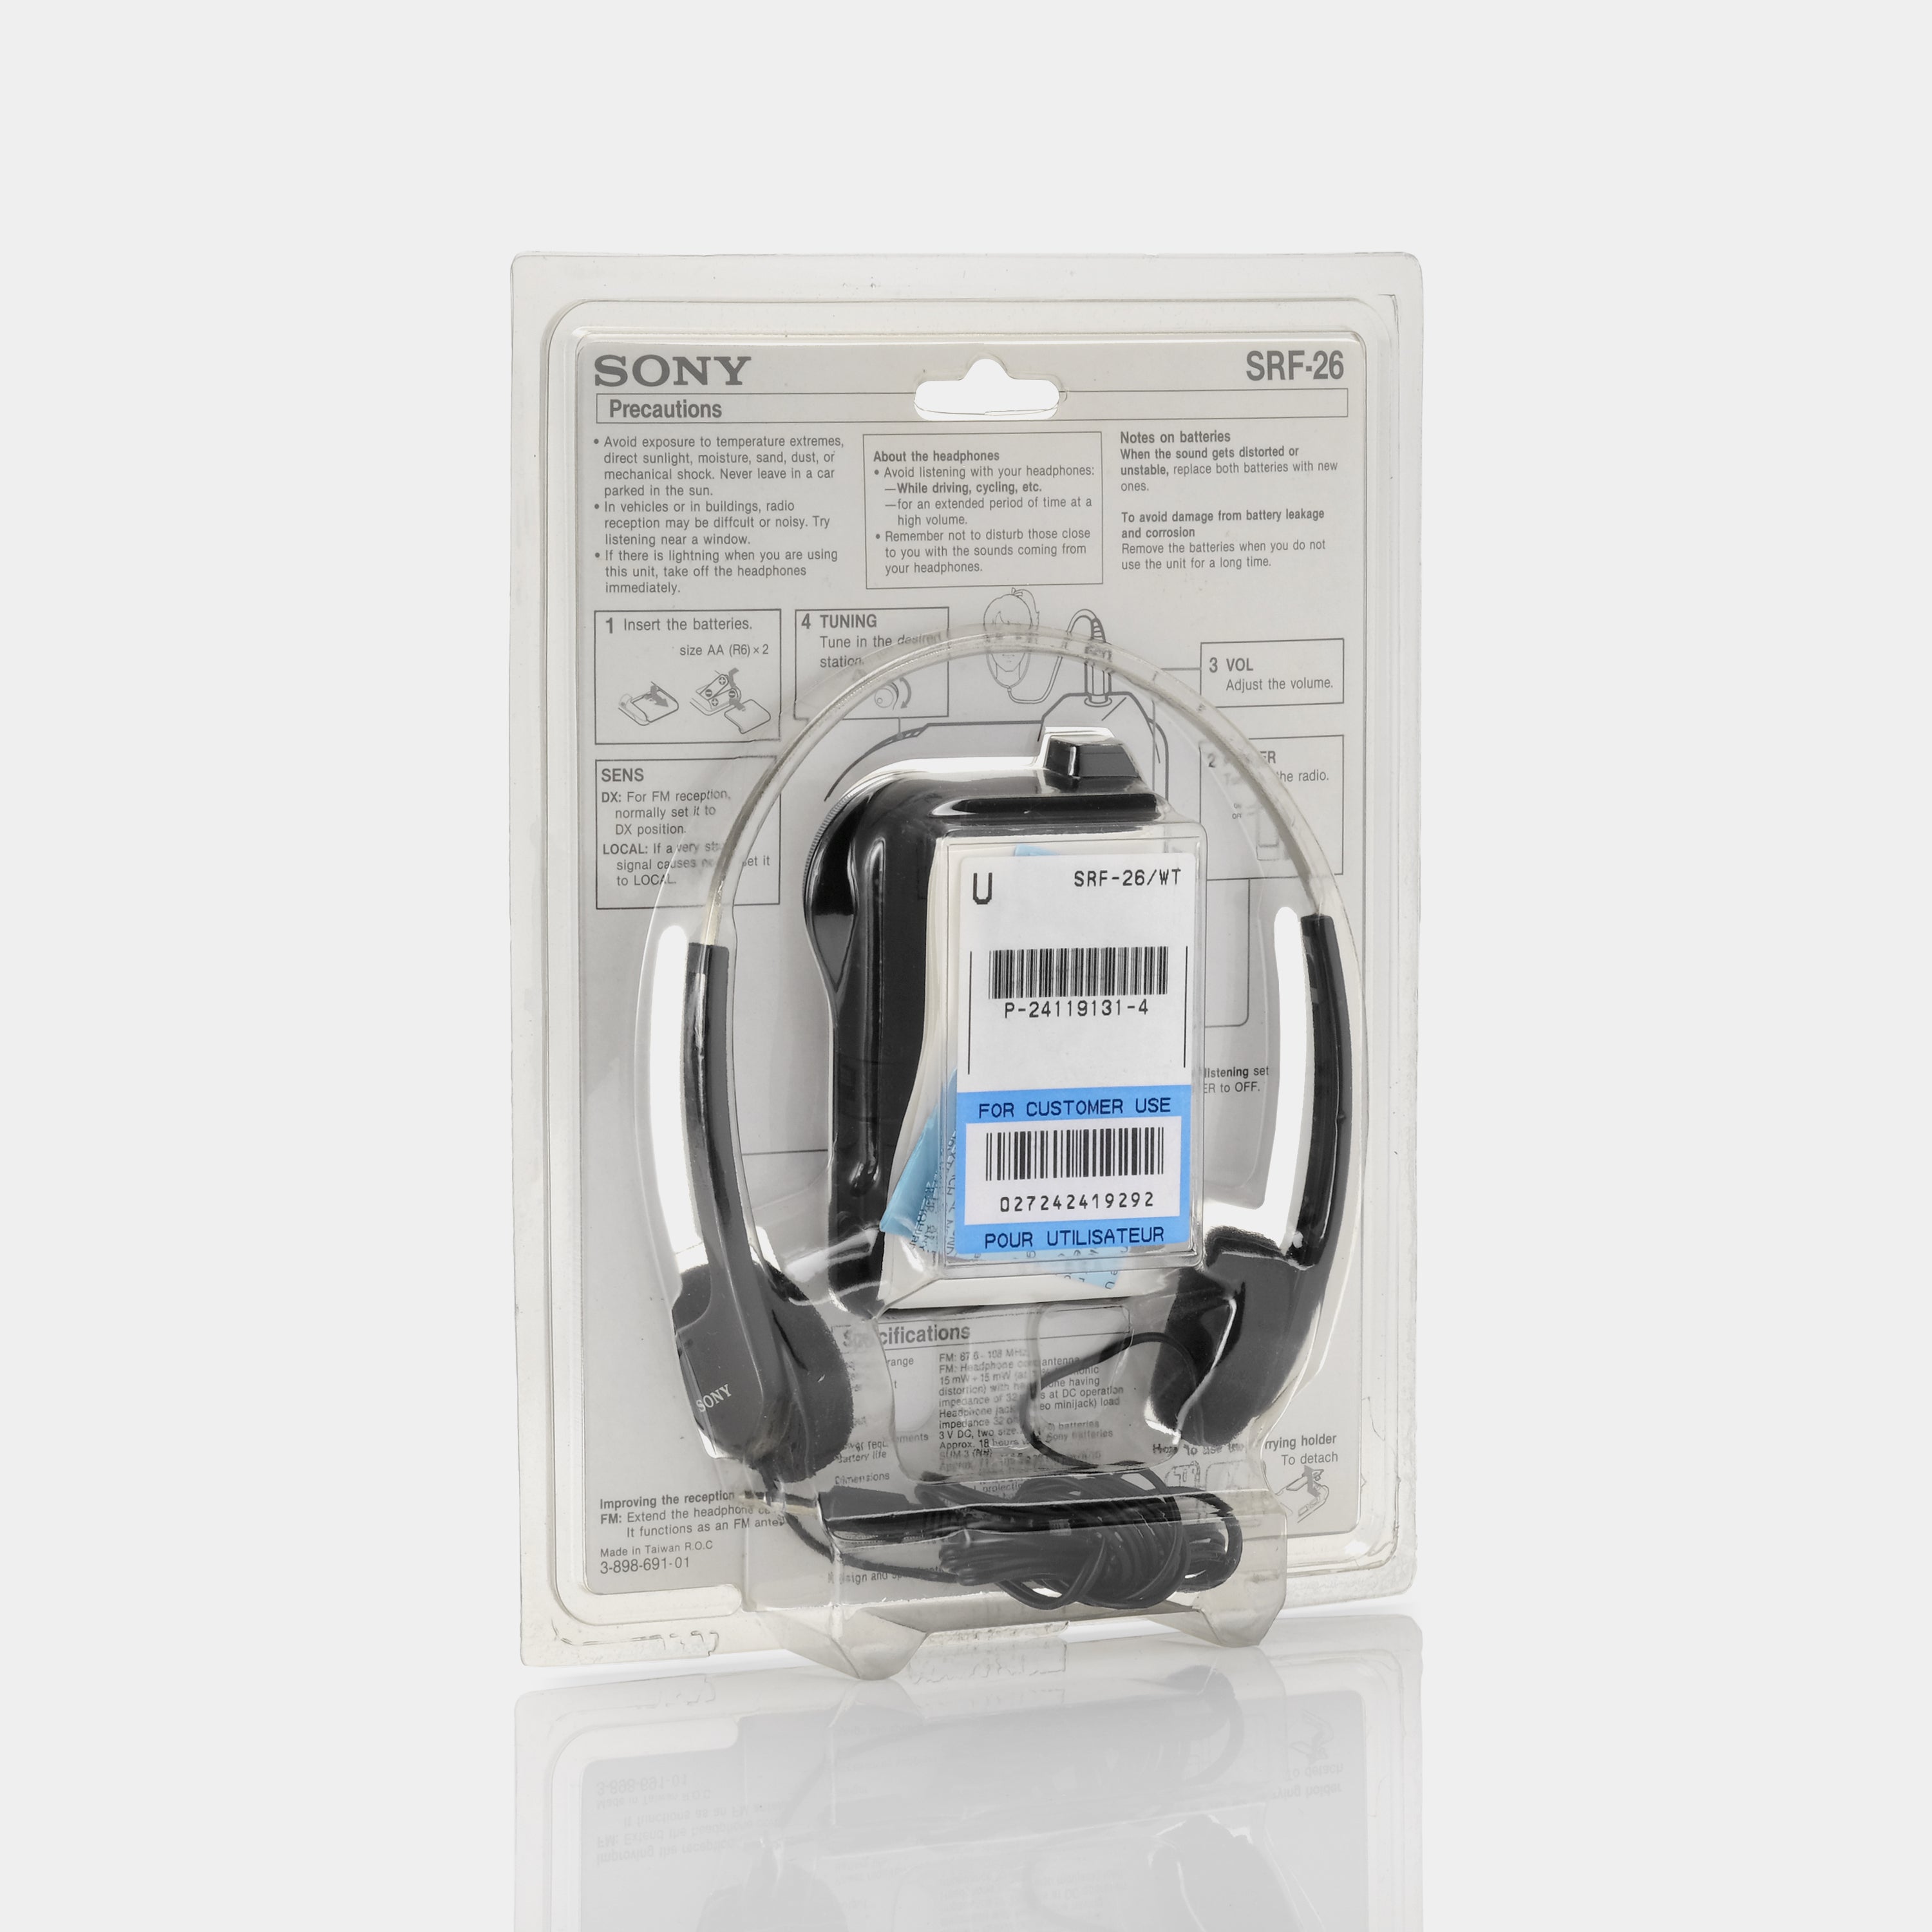 Sony Walkman SRF-26 FM Portable Radio (New In Packaging)